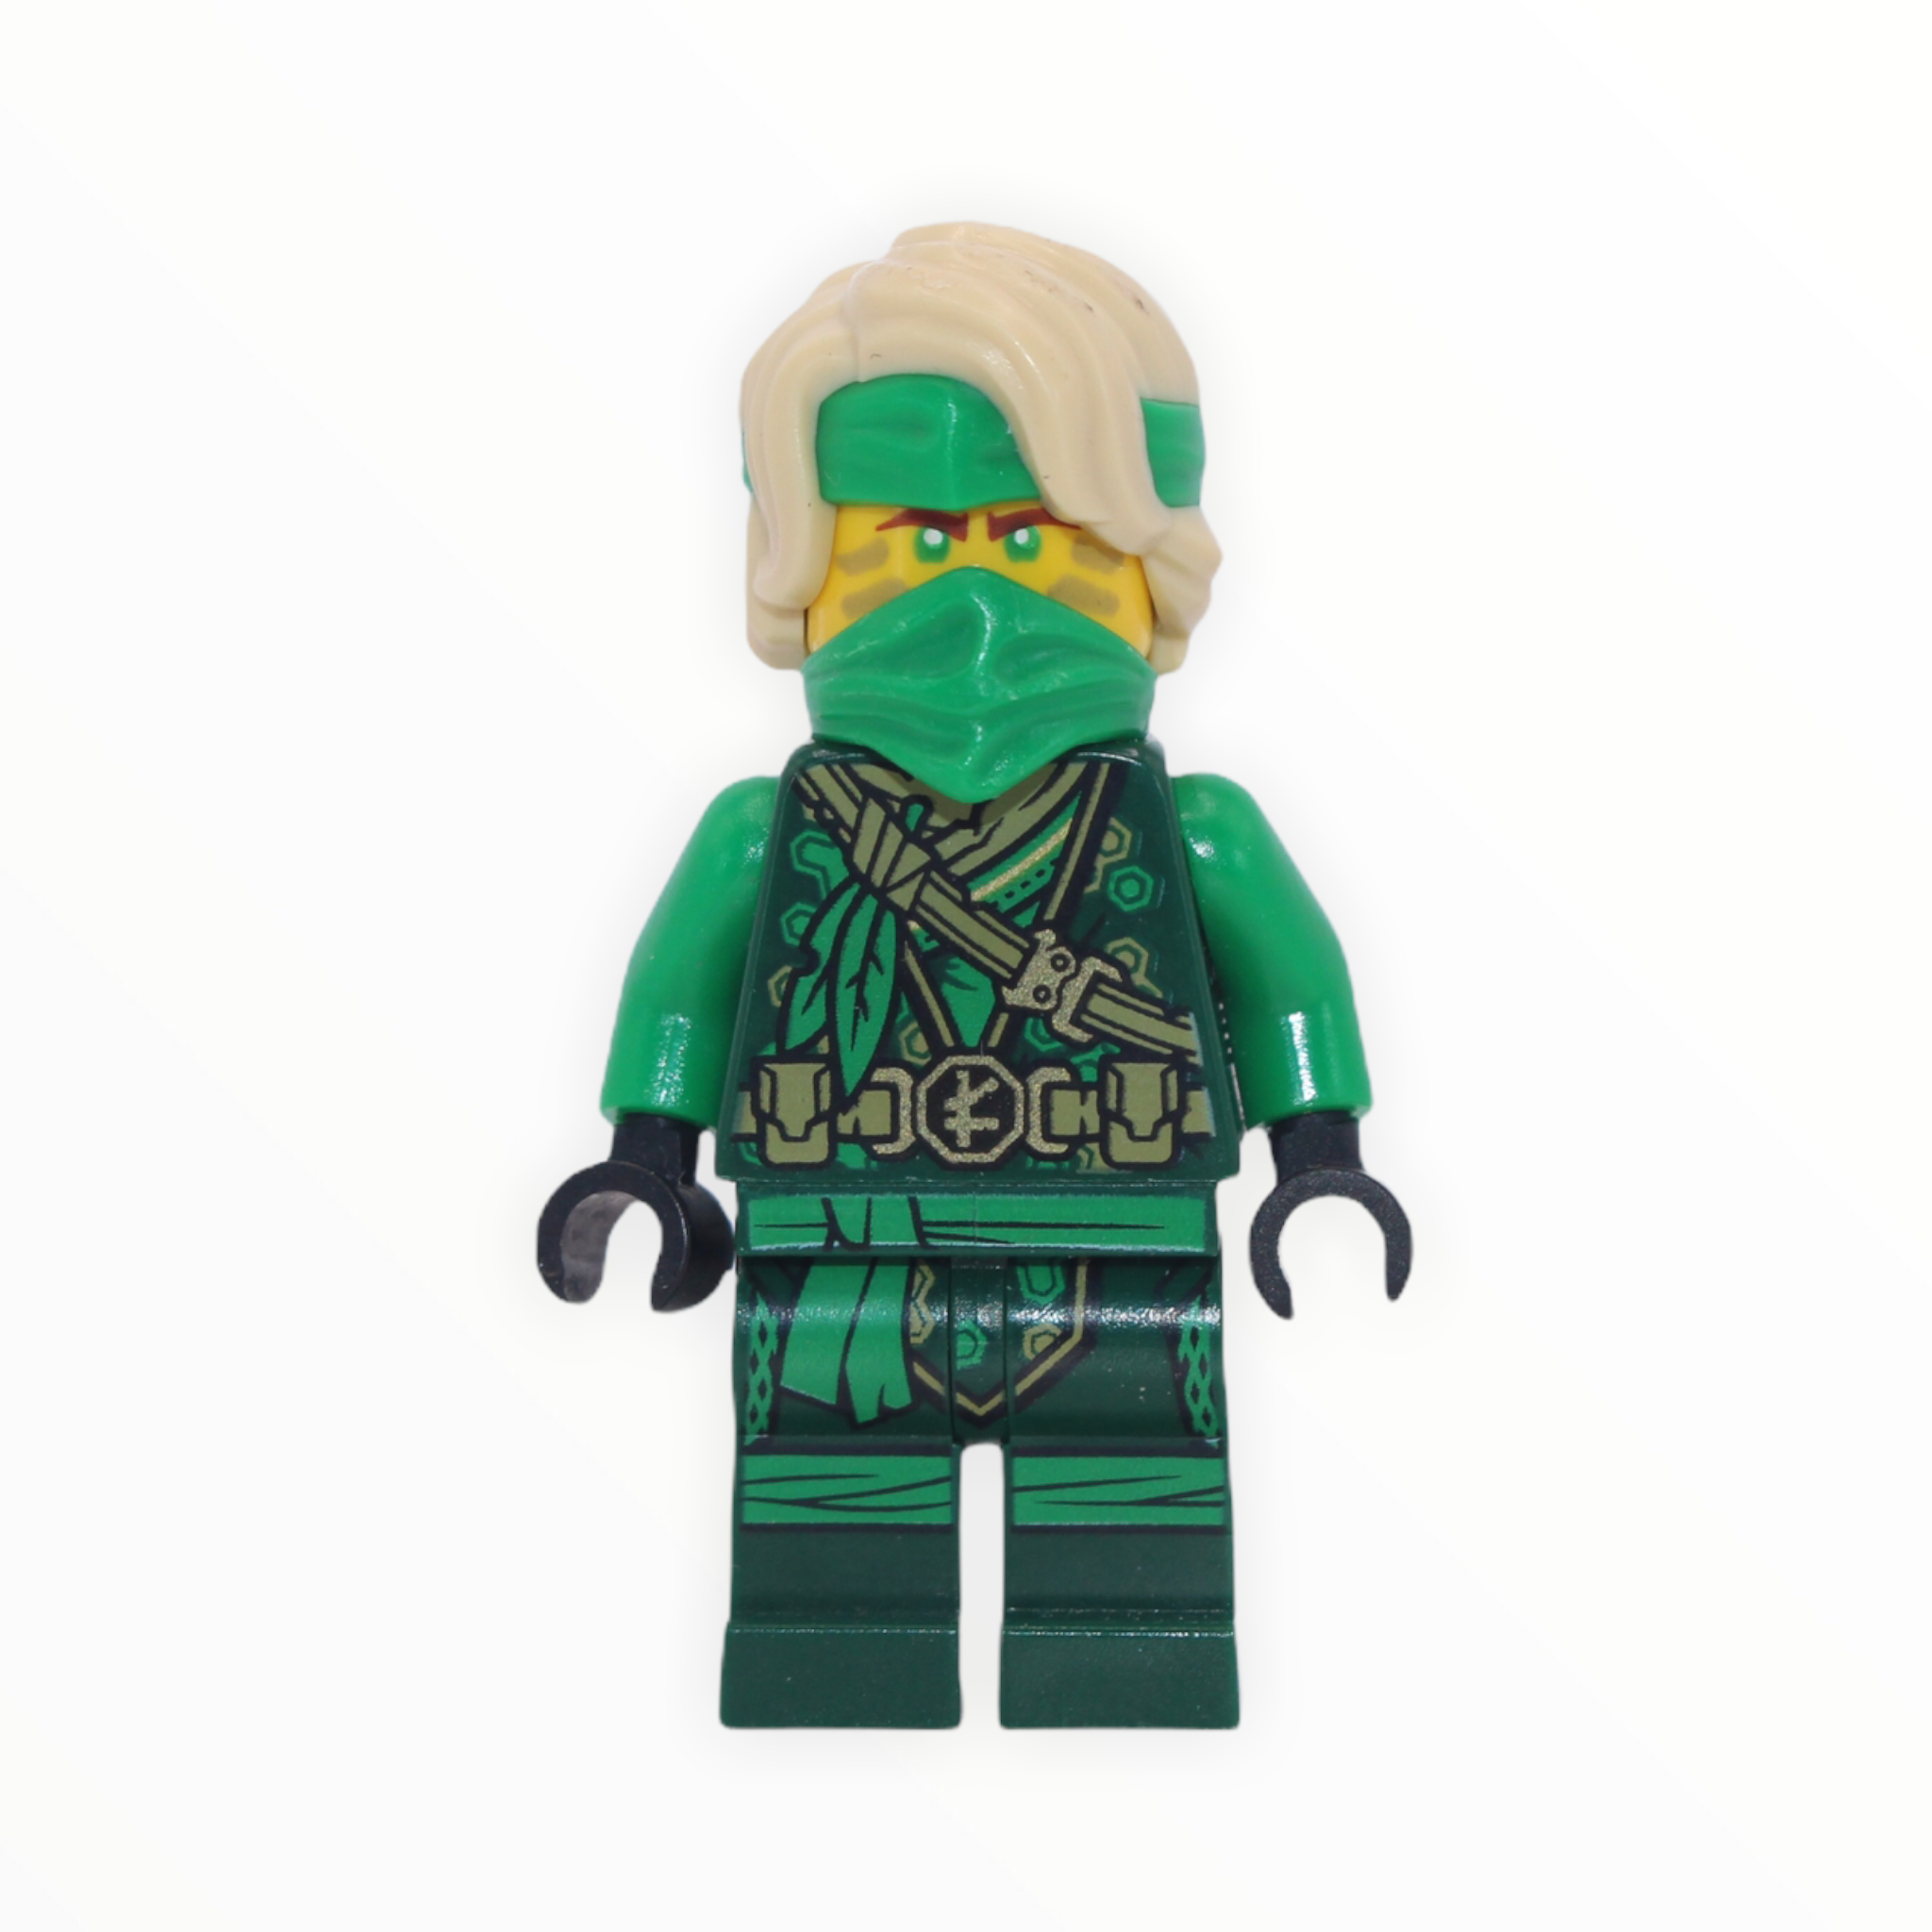 Lloyd (The Island, mask and bandana)